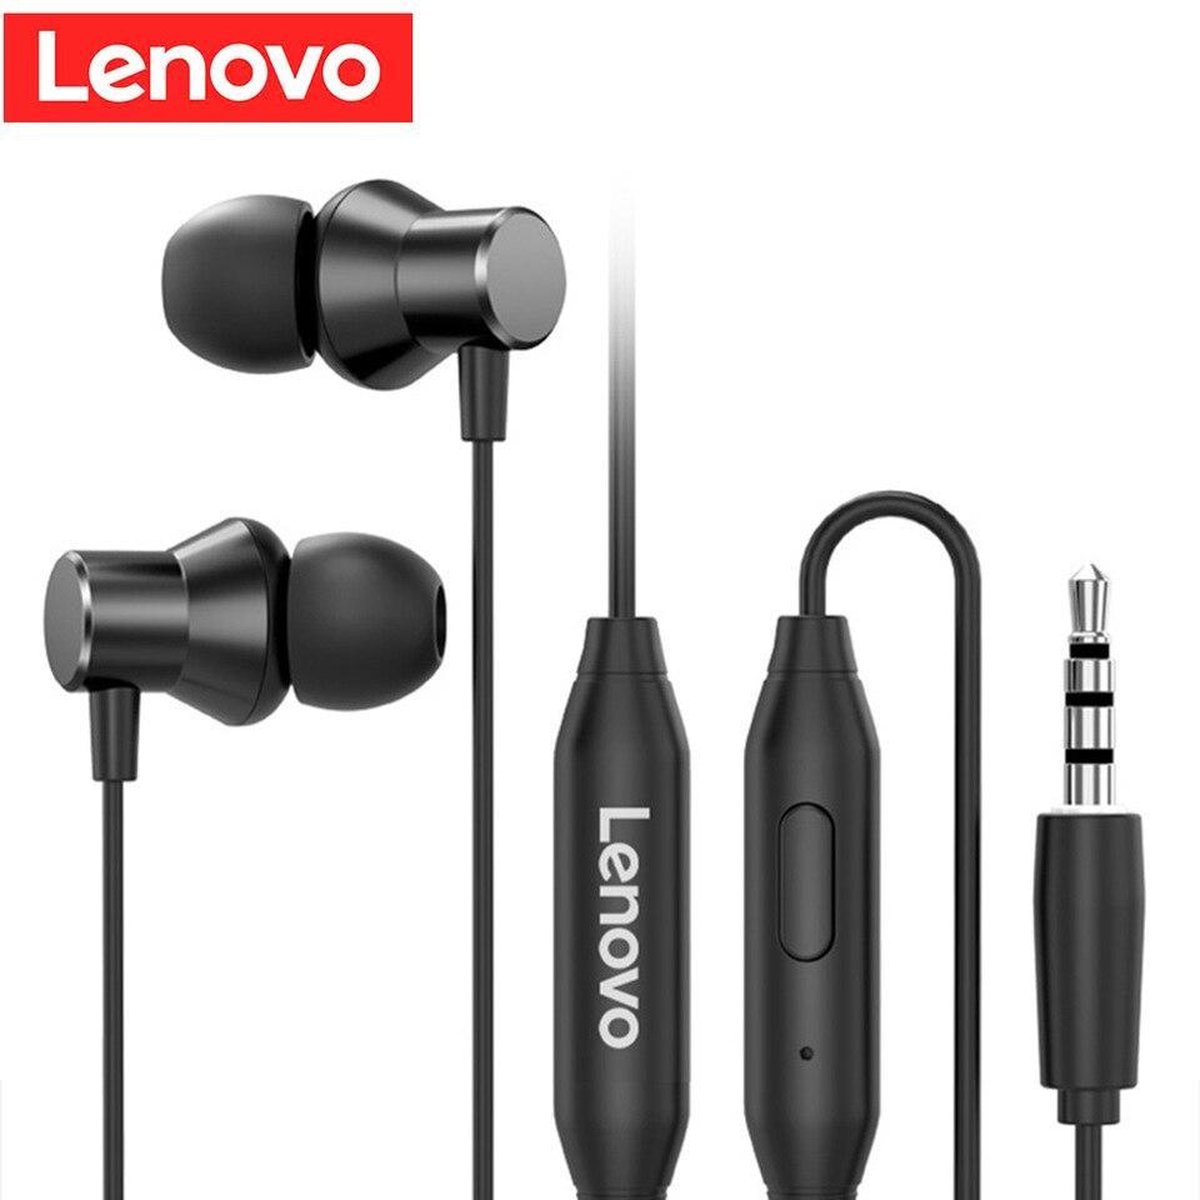 Lenovo Bass In-Ear Earphone Headphones 3.5mm Jack - HF130